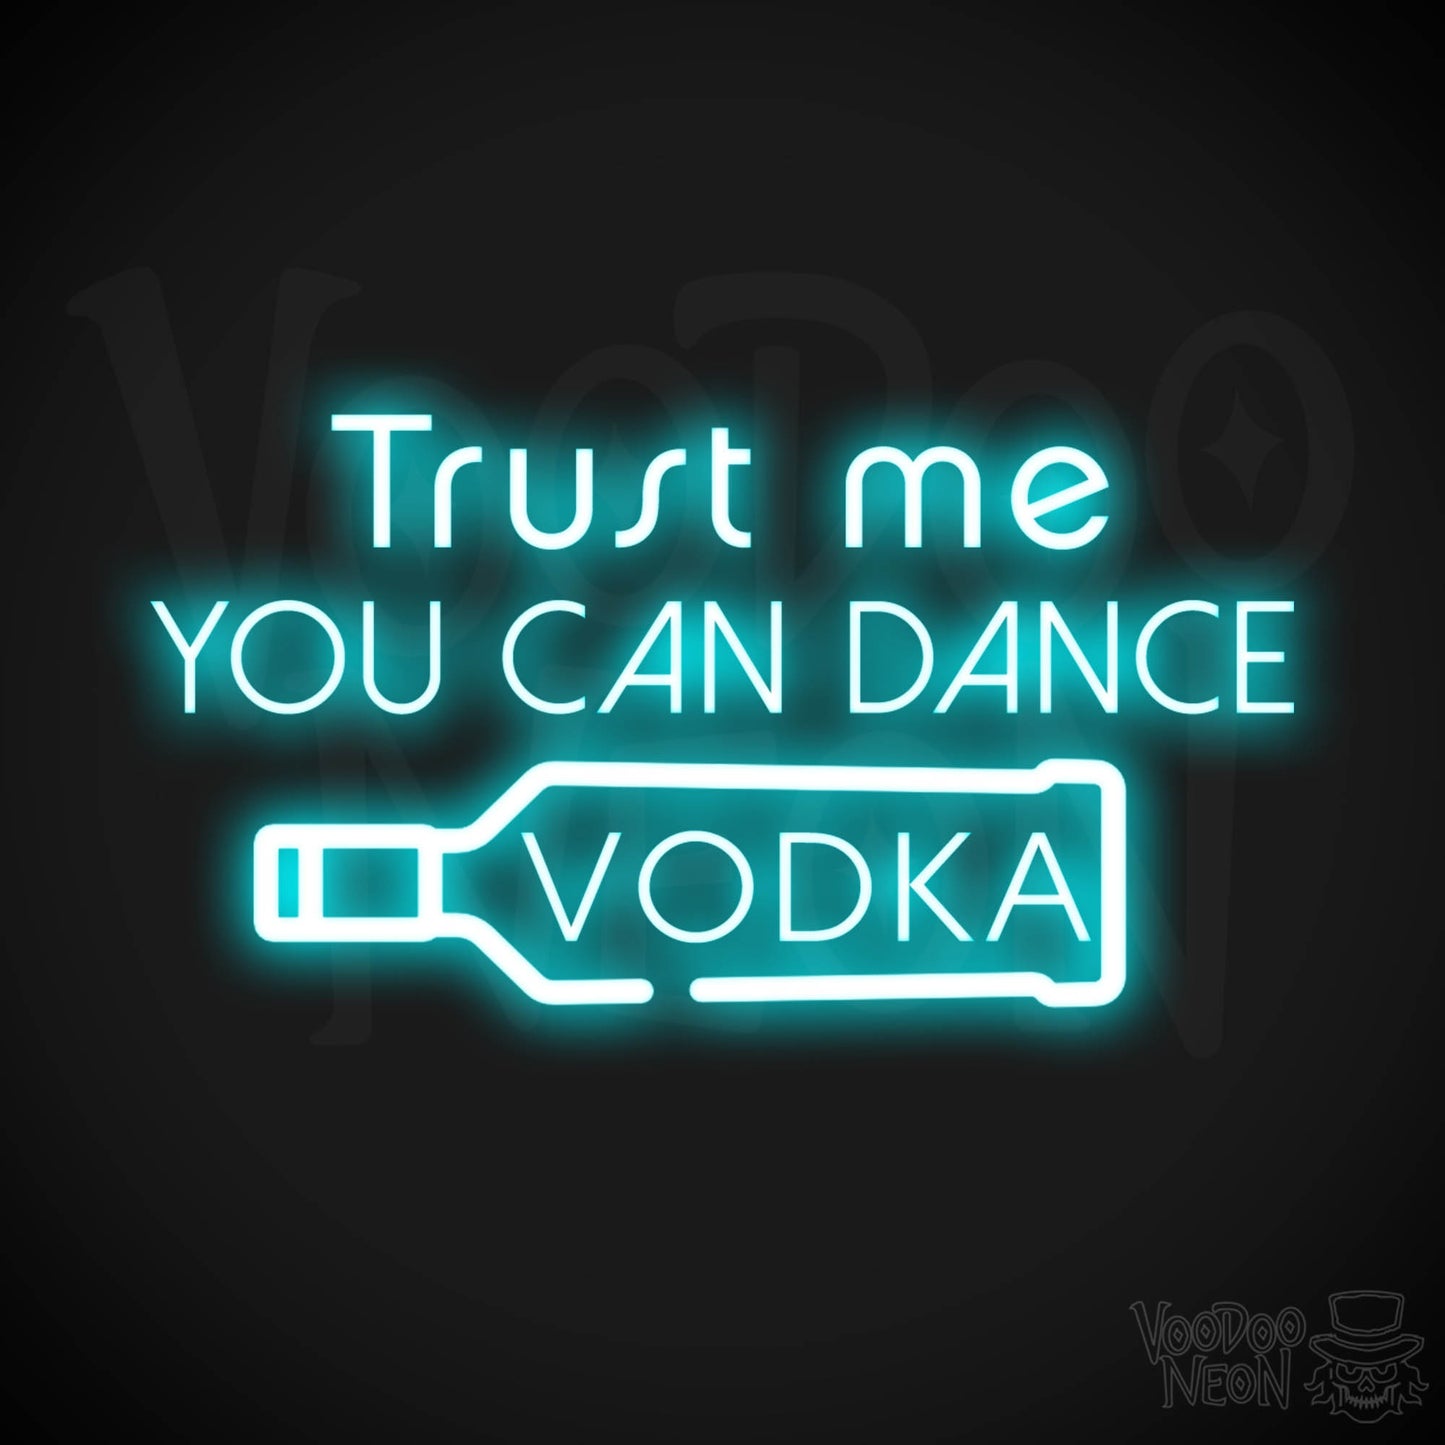 Trust Me You Can Dance Vodka Neon Sign - Vodka Bar Sign - LED Signs - Color Ice Blue